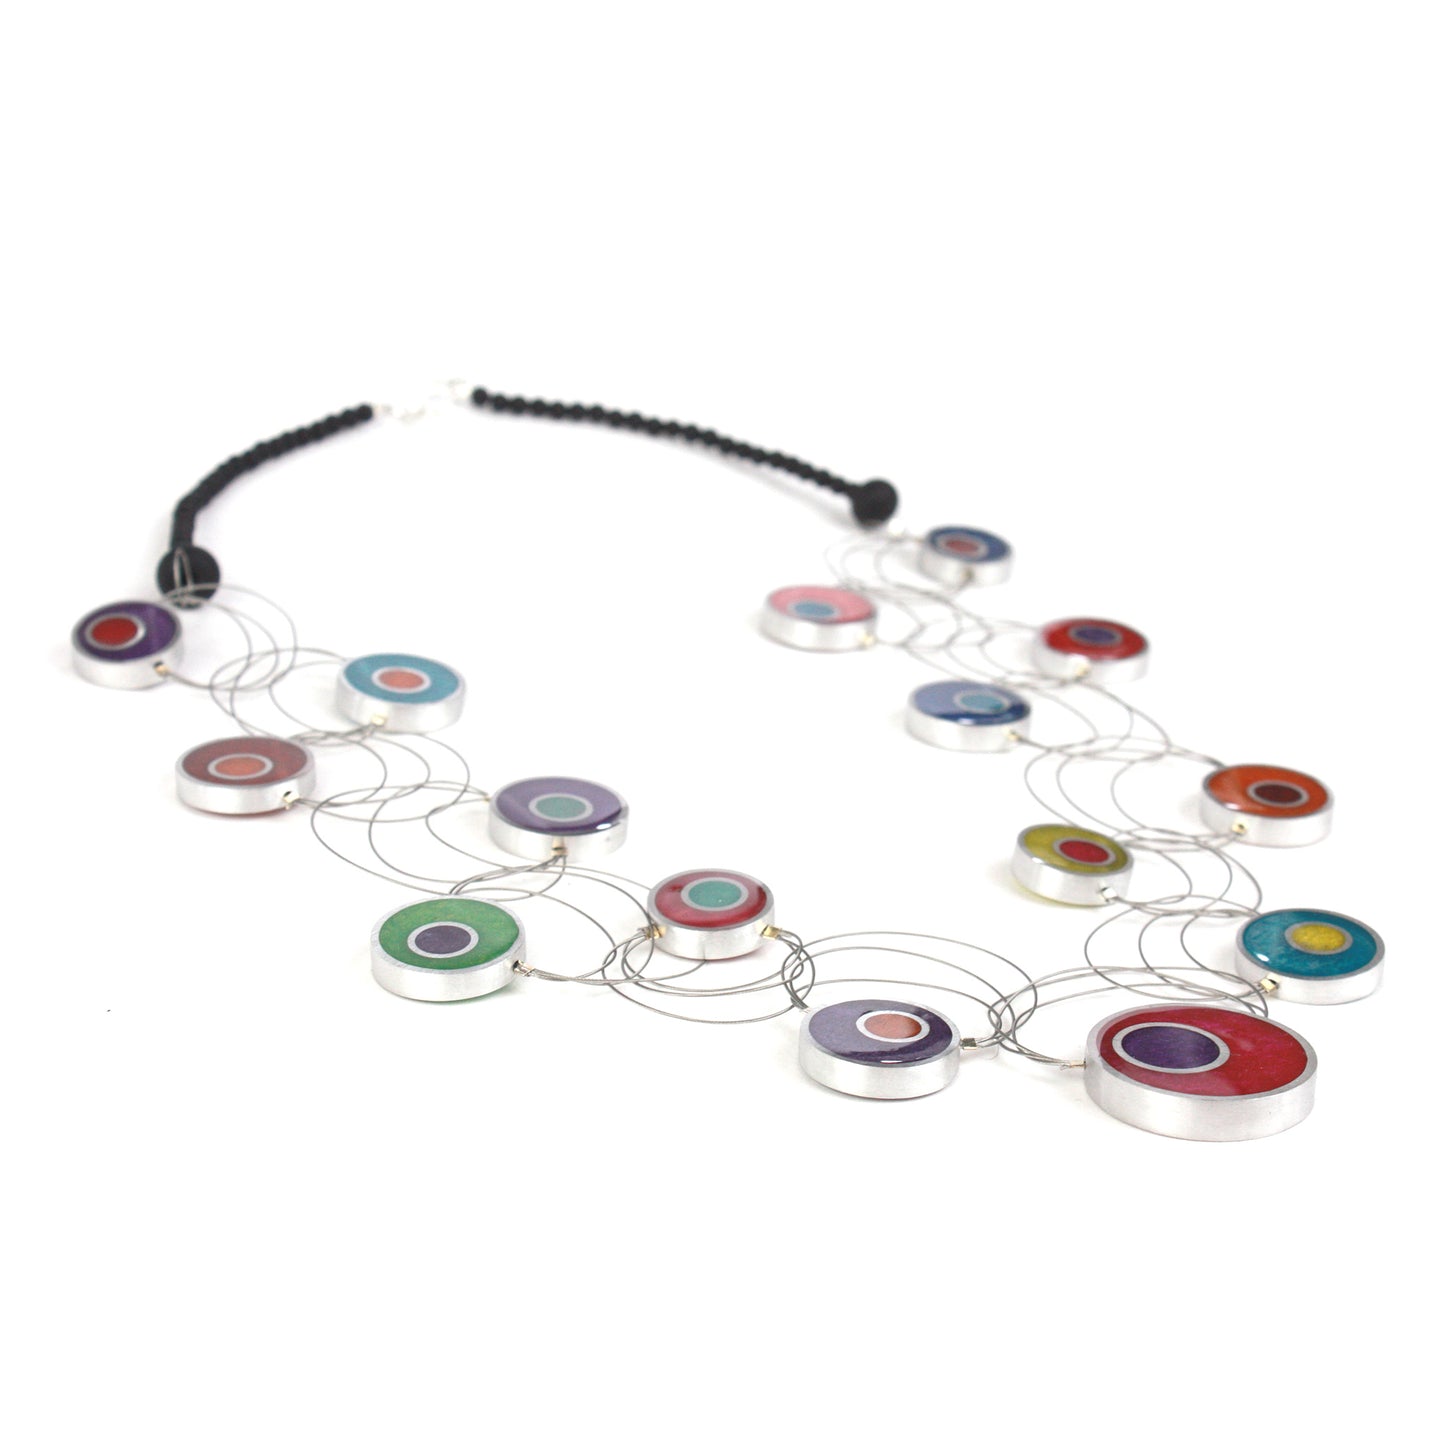 Resinique interlocking circles necklace - Multi colored